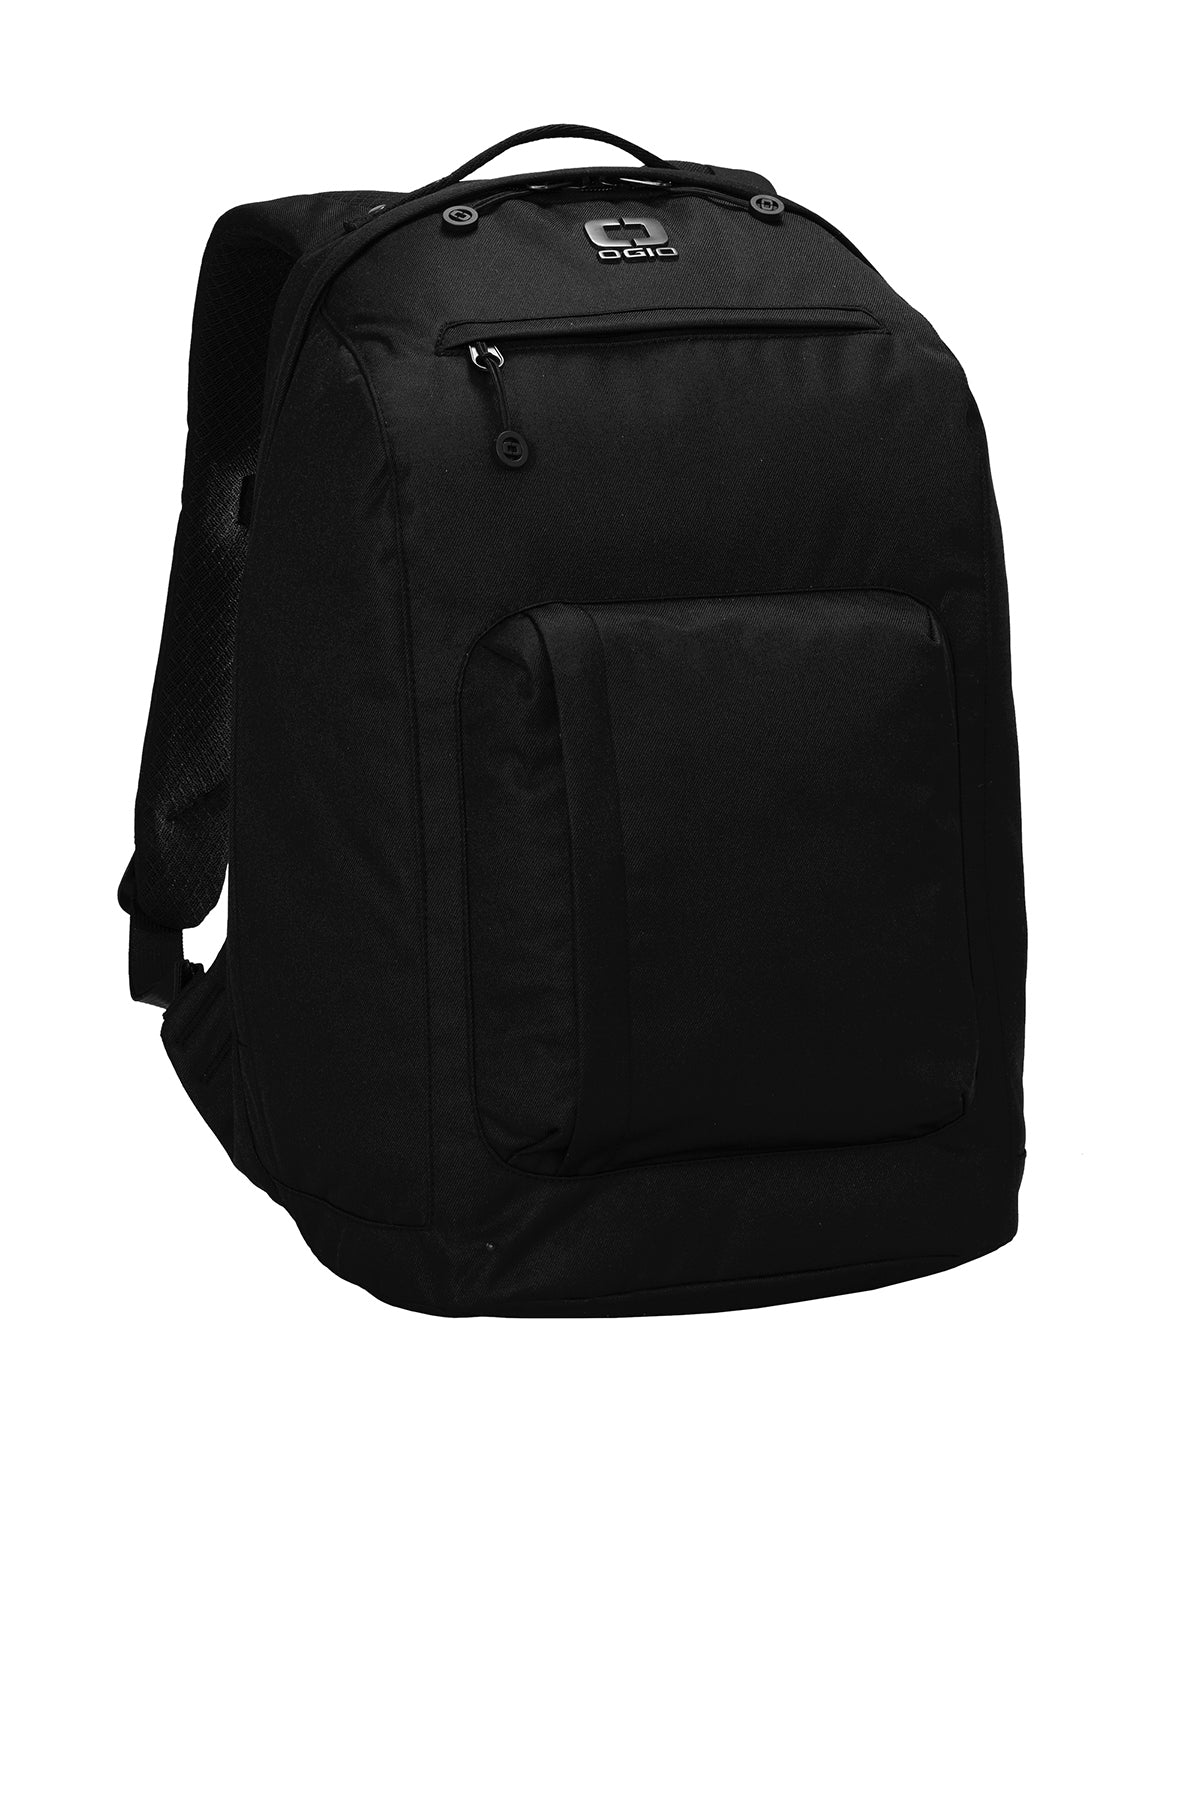 OGIO Downtown Customzied Backpacks, Black